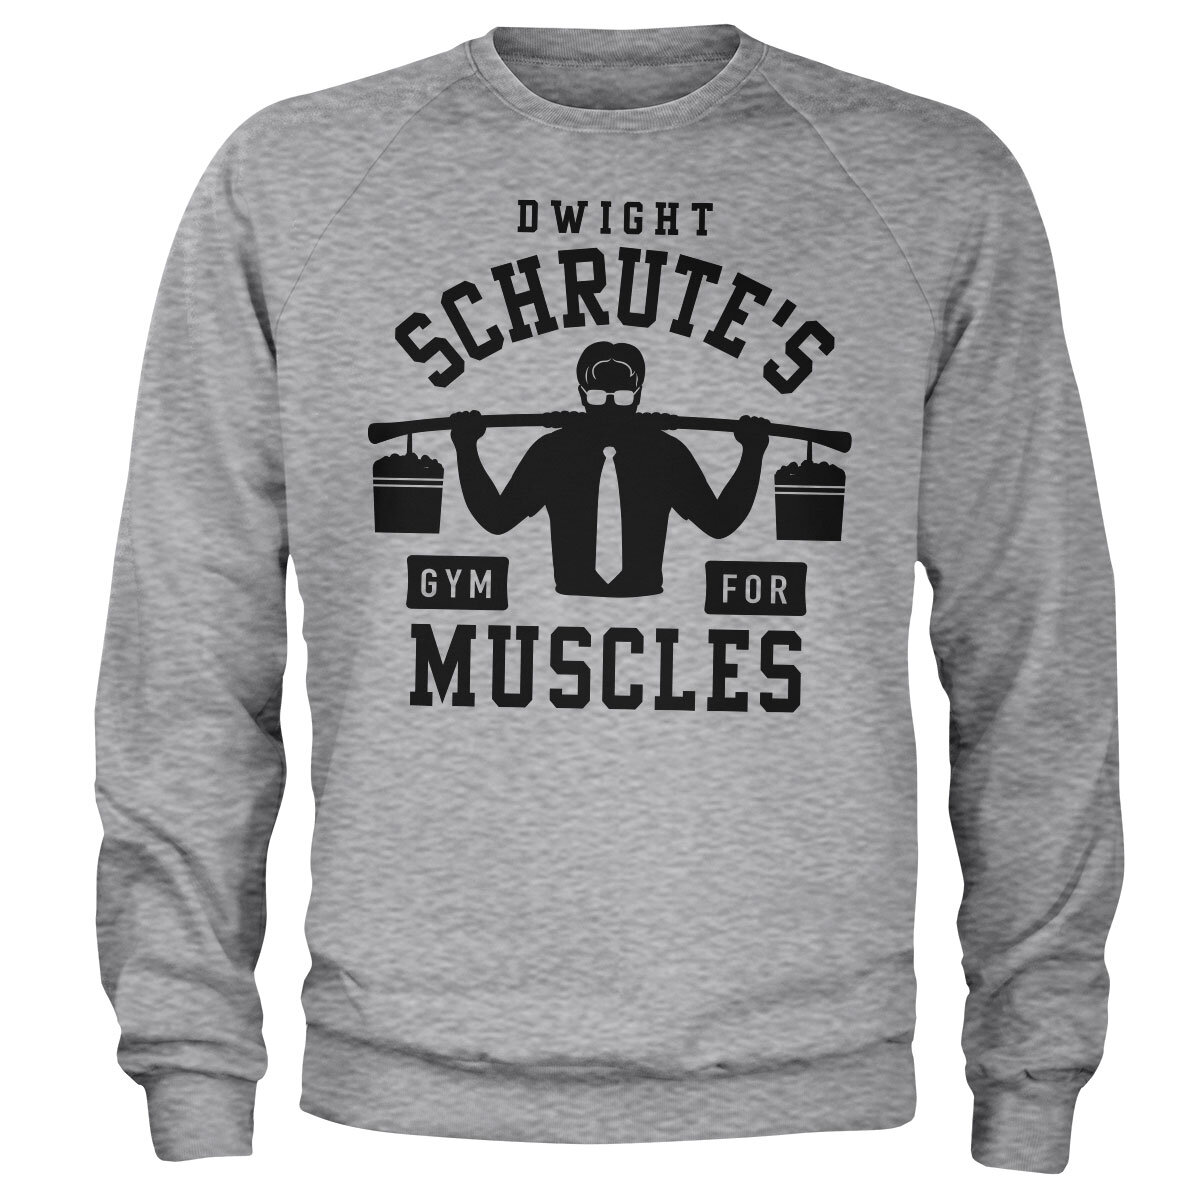 Dwight Schrute's Gym Sweatshirt